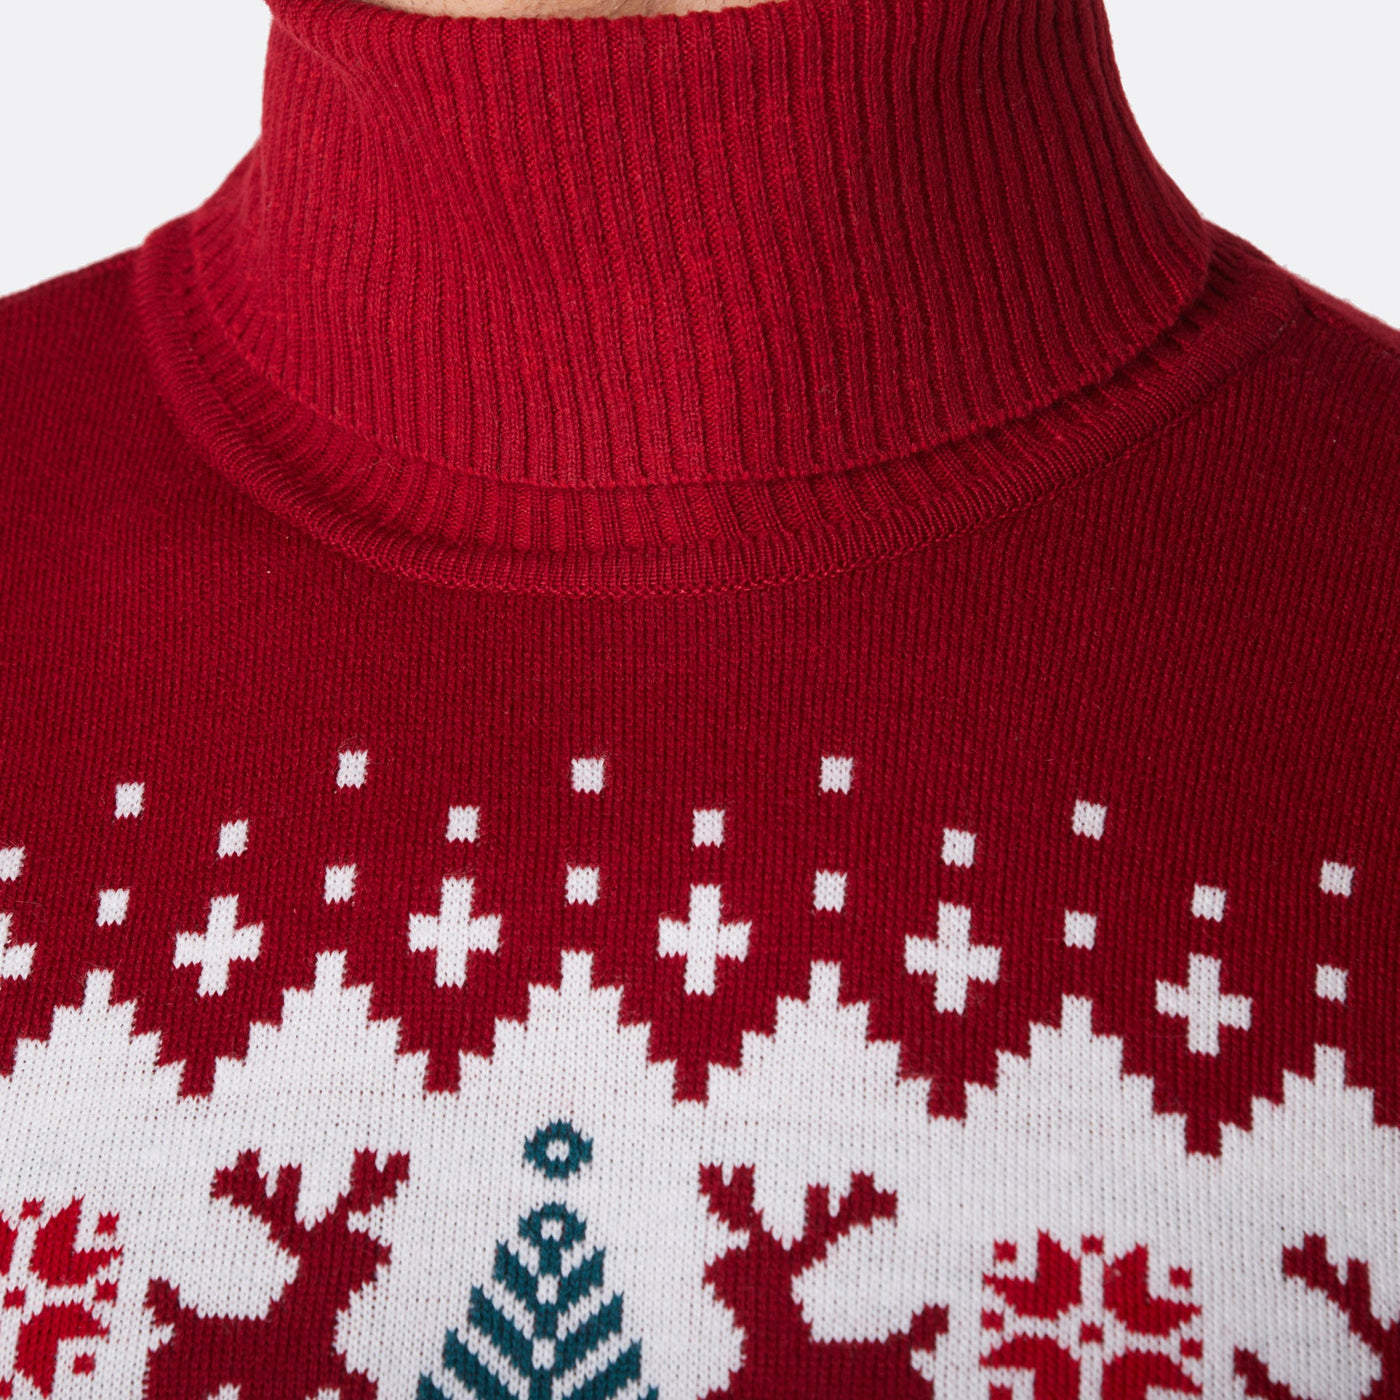 Women's Turtleneck Christmas Sweater